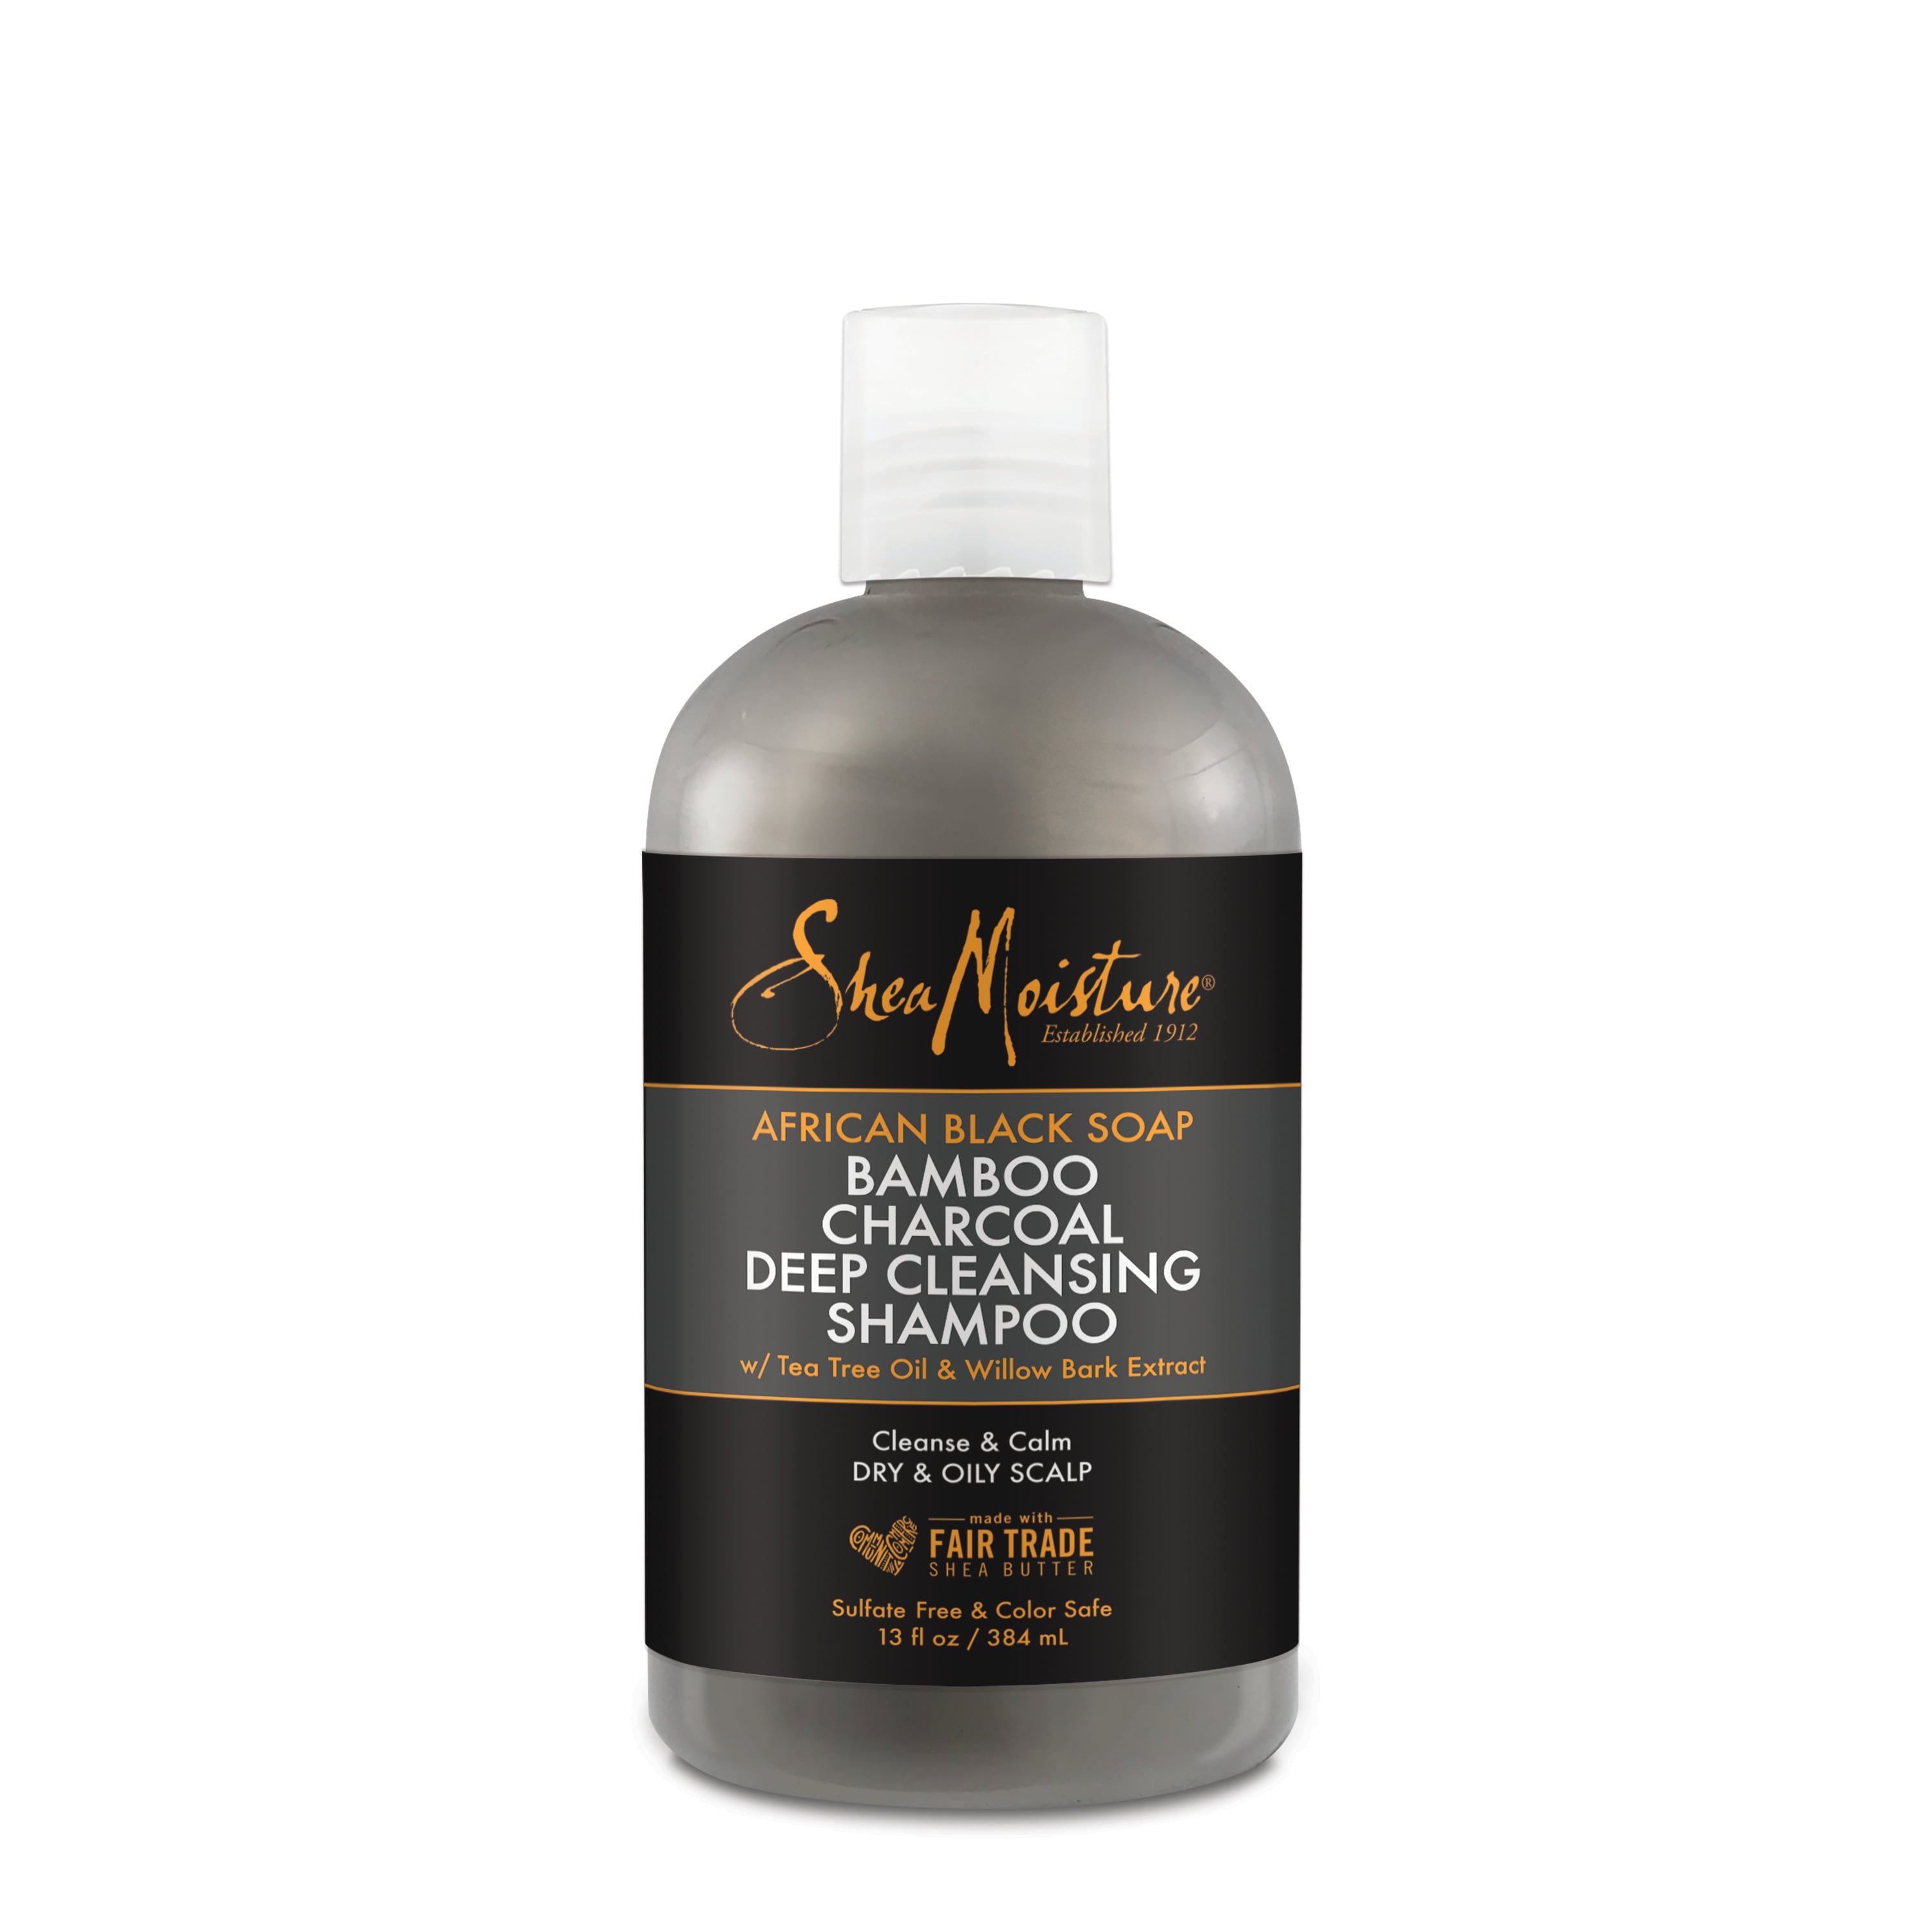 Sheamoisture African Black Soap Bamboo Charcoal Deep Cleansing Shampoo 13 Oz Walmart Com Walmart Com